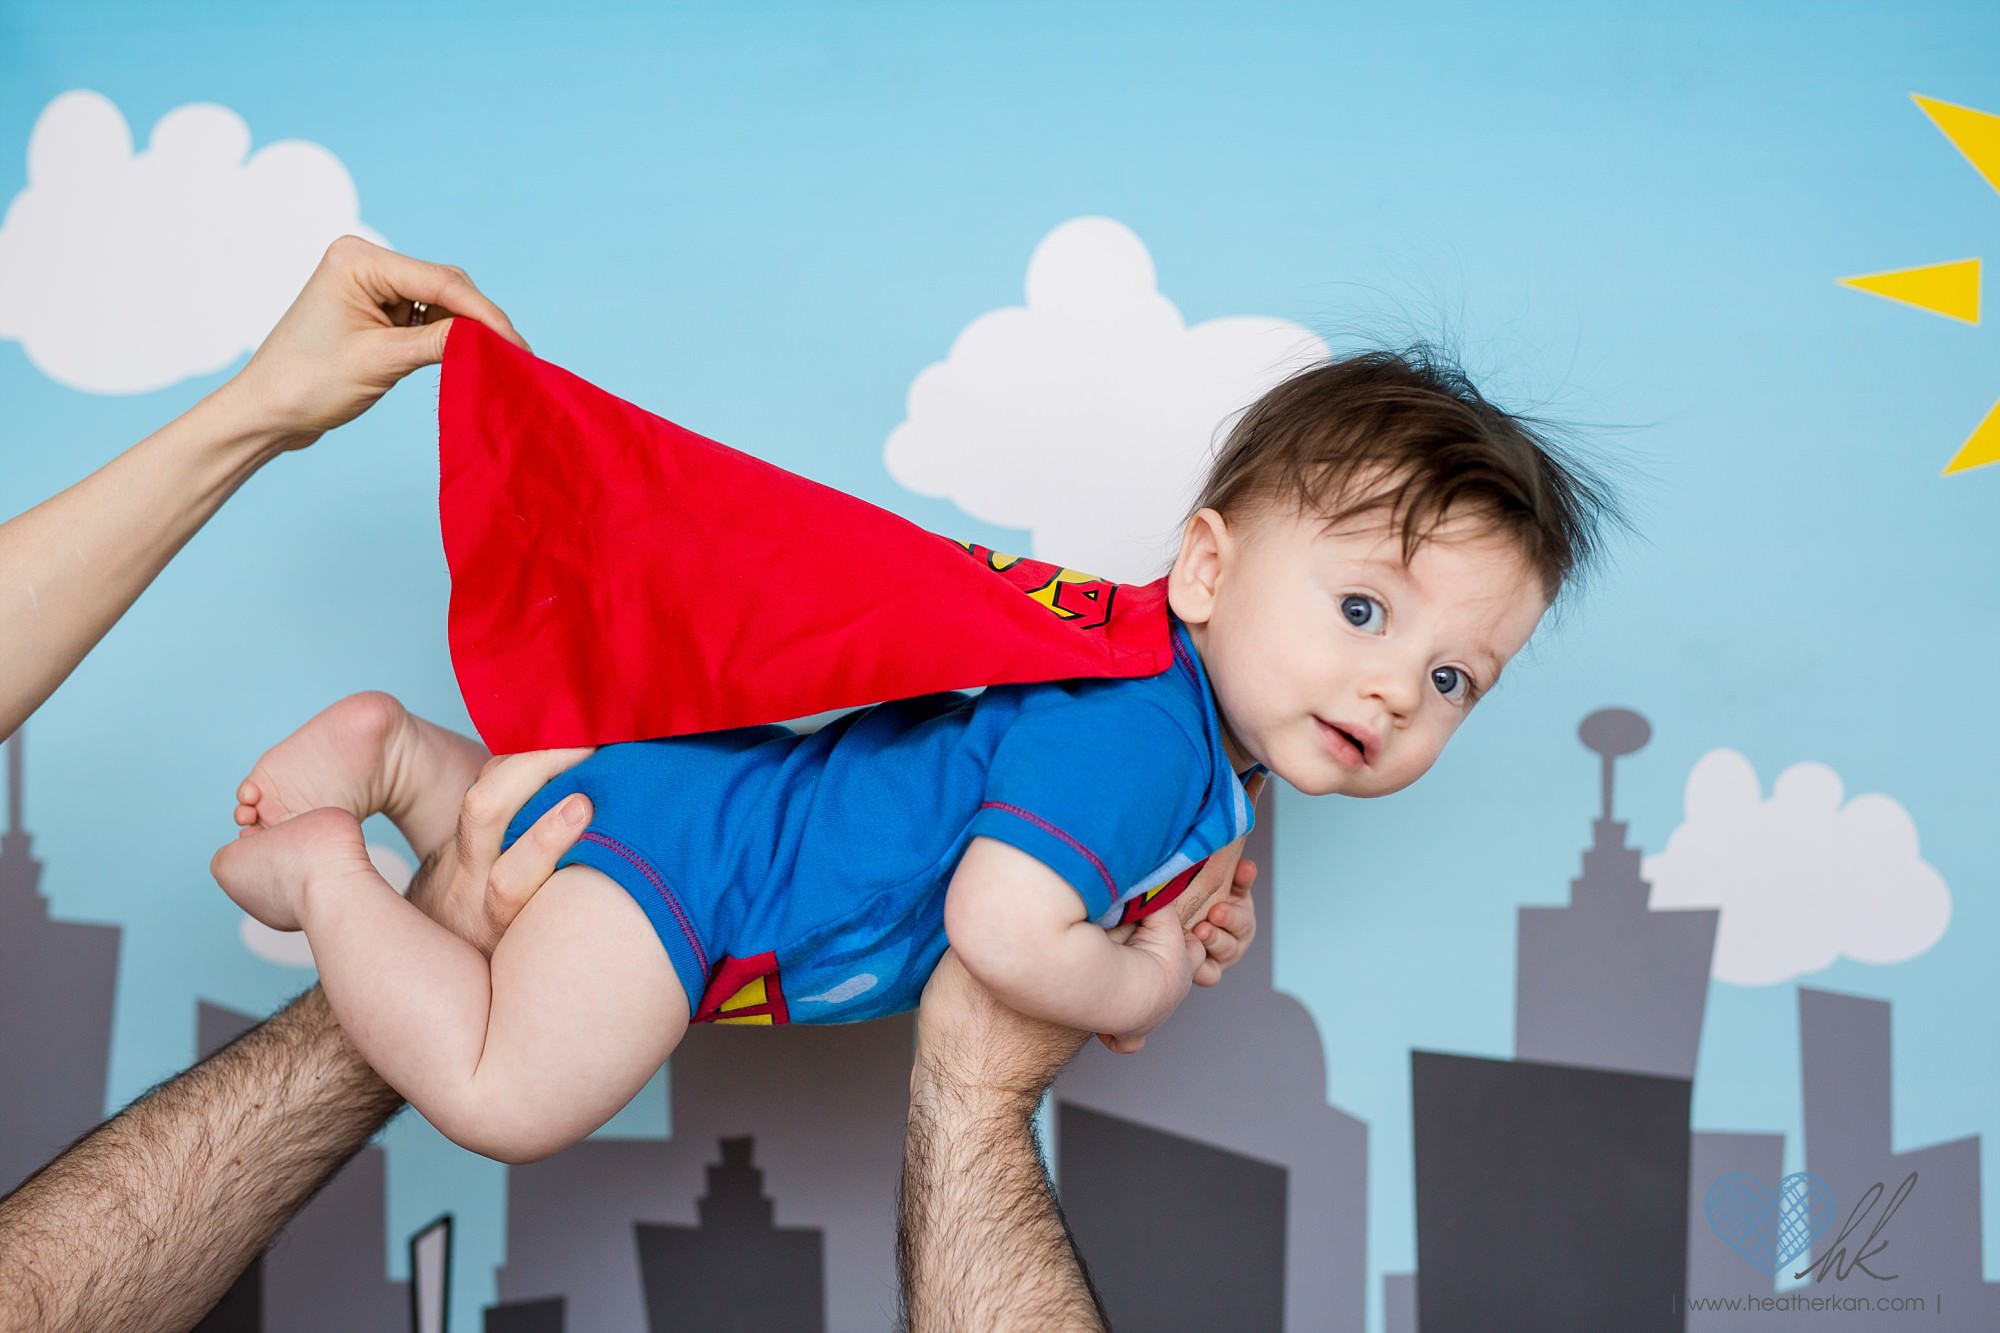 Superman theme photo session 6 month